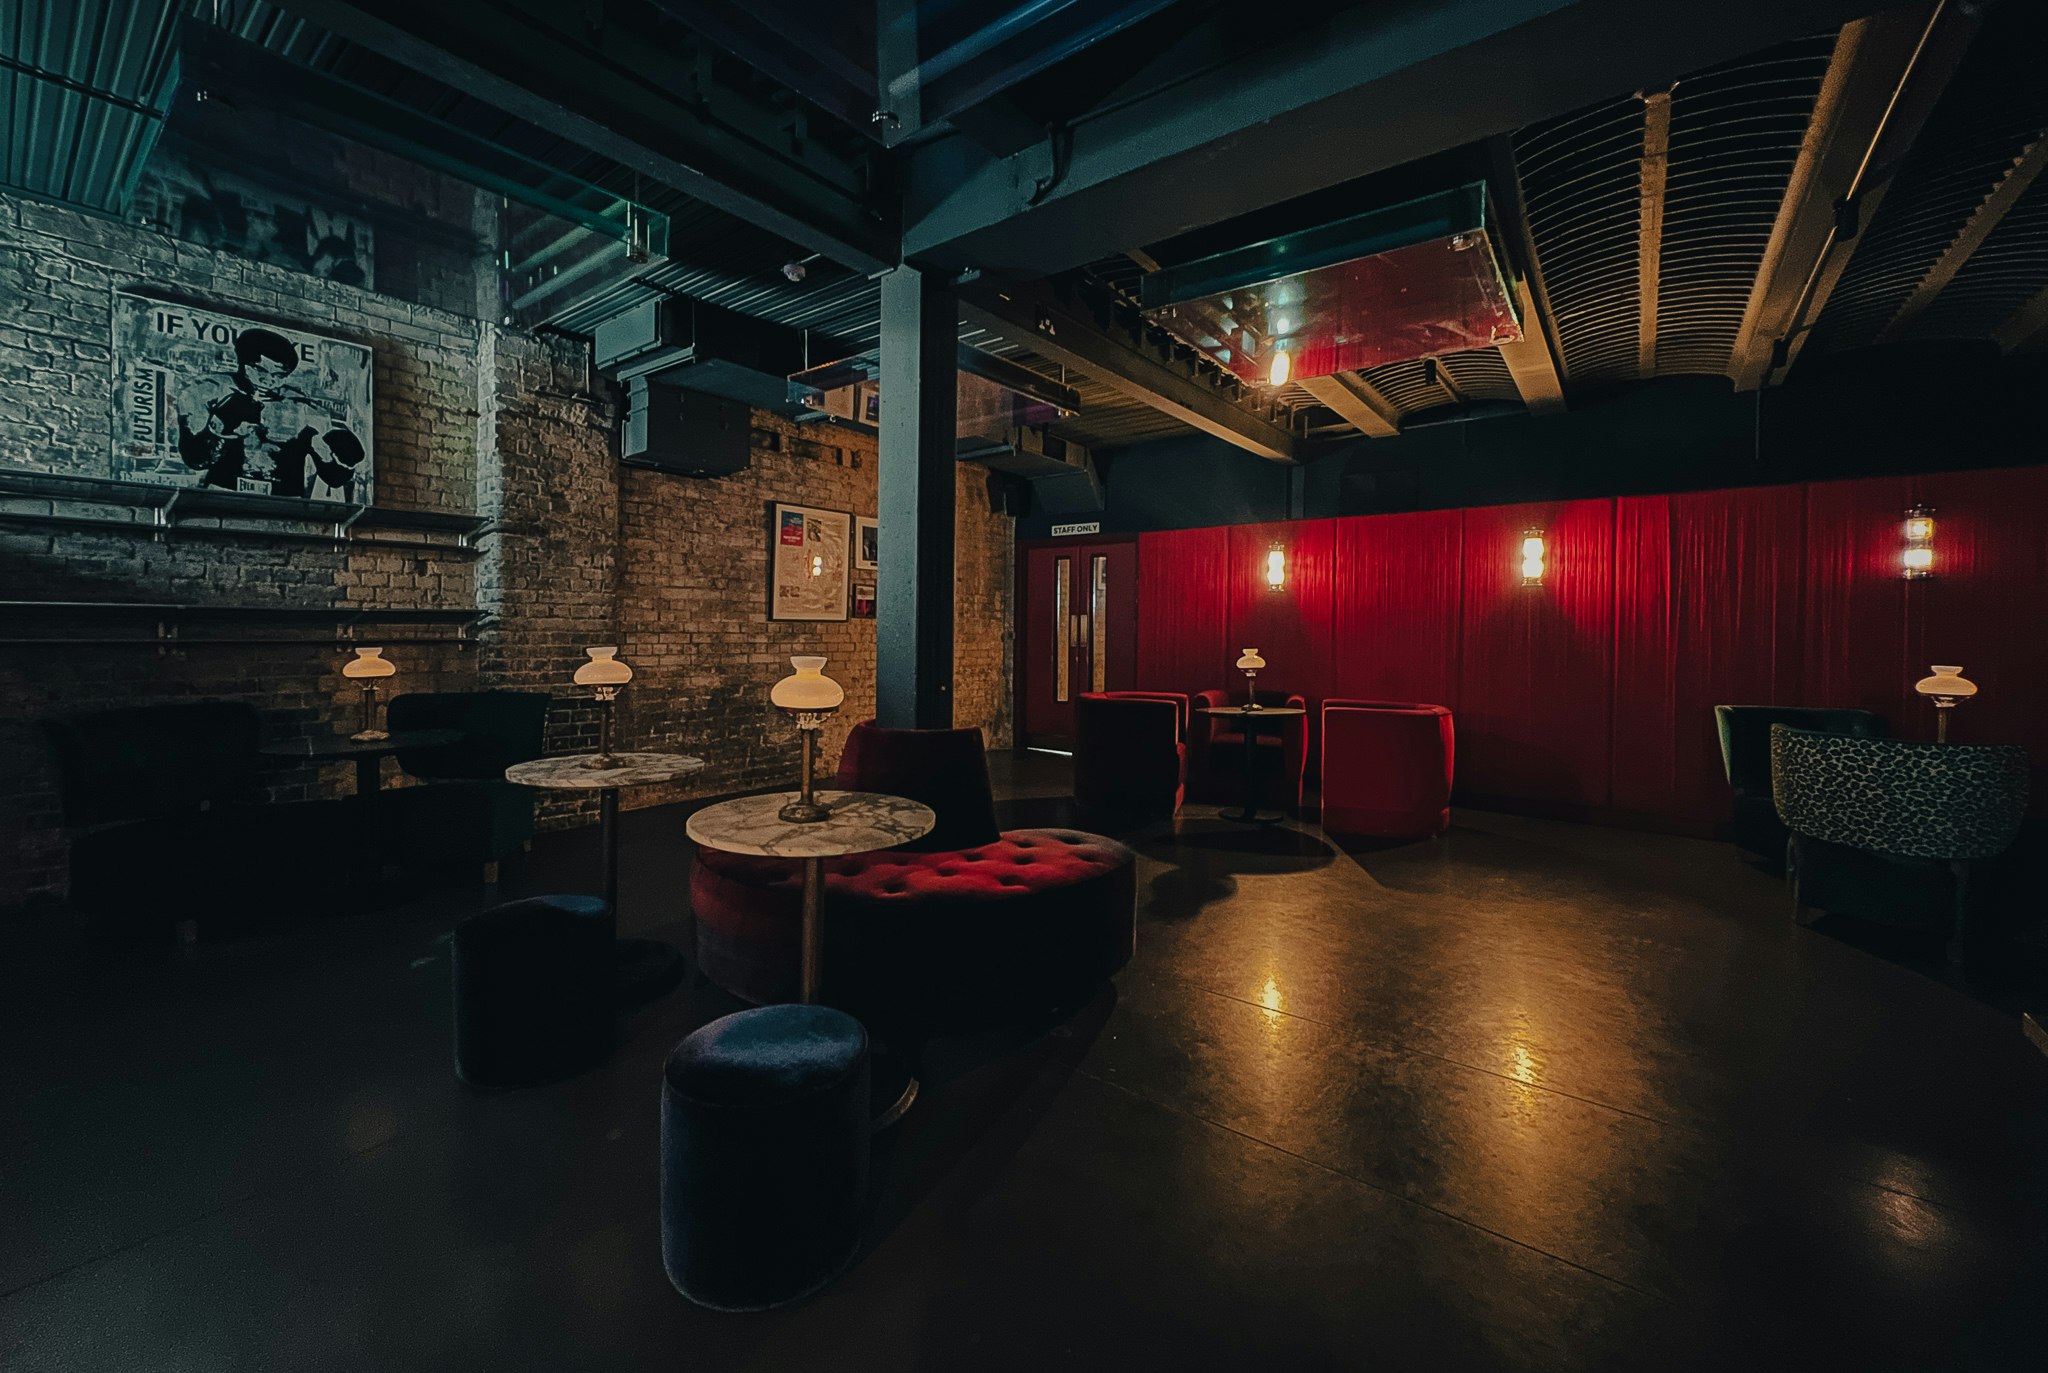 Office Party Venues in London - Jack Solomons Club & Sophie's Soho